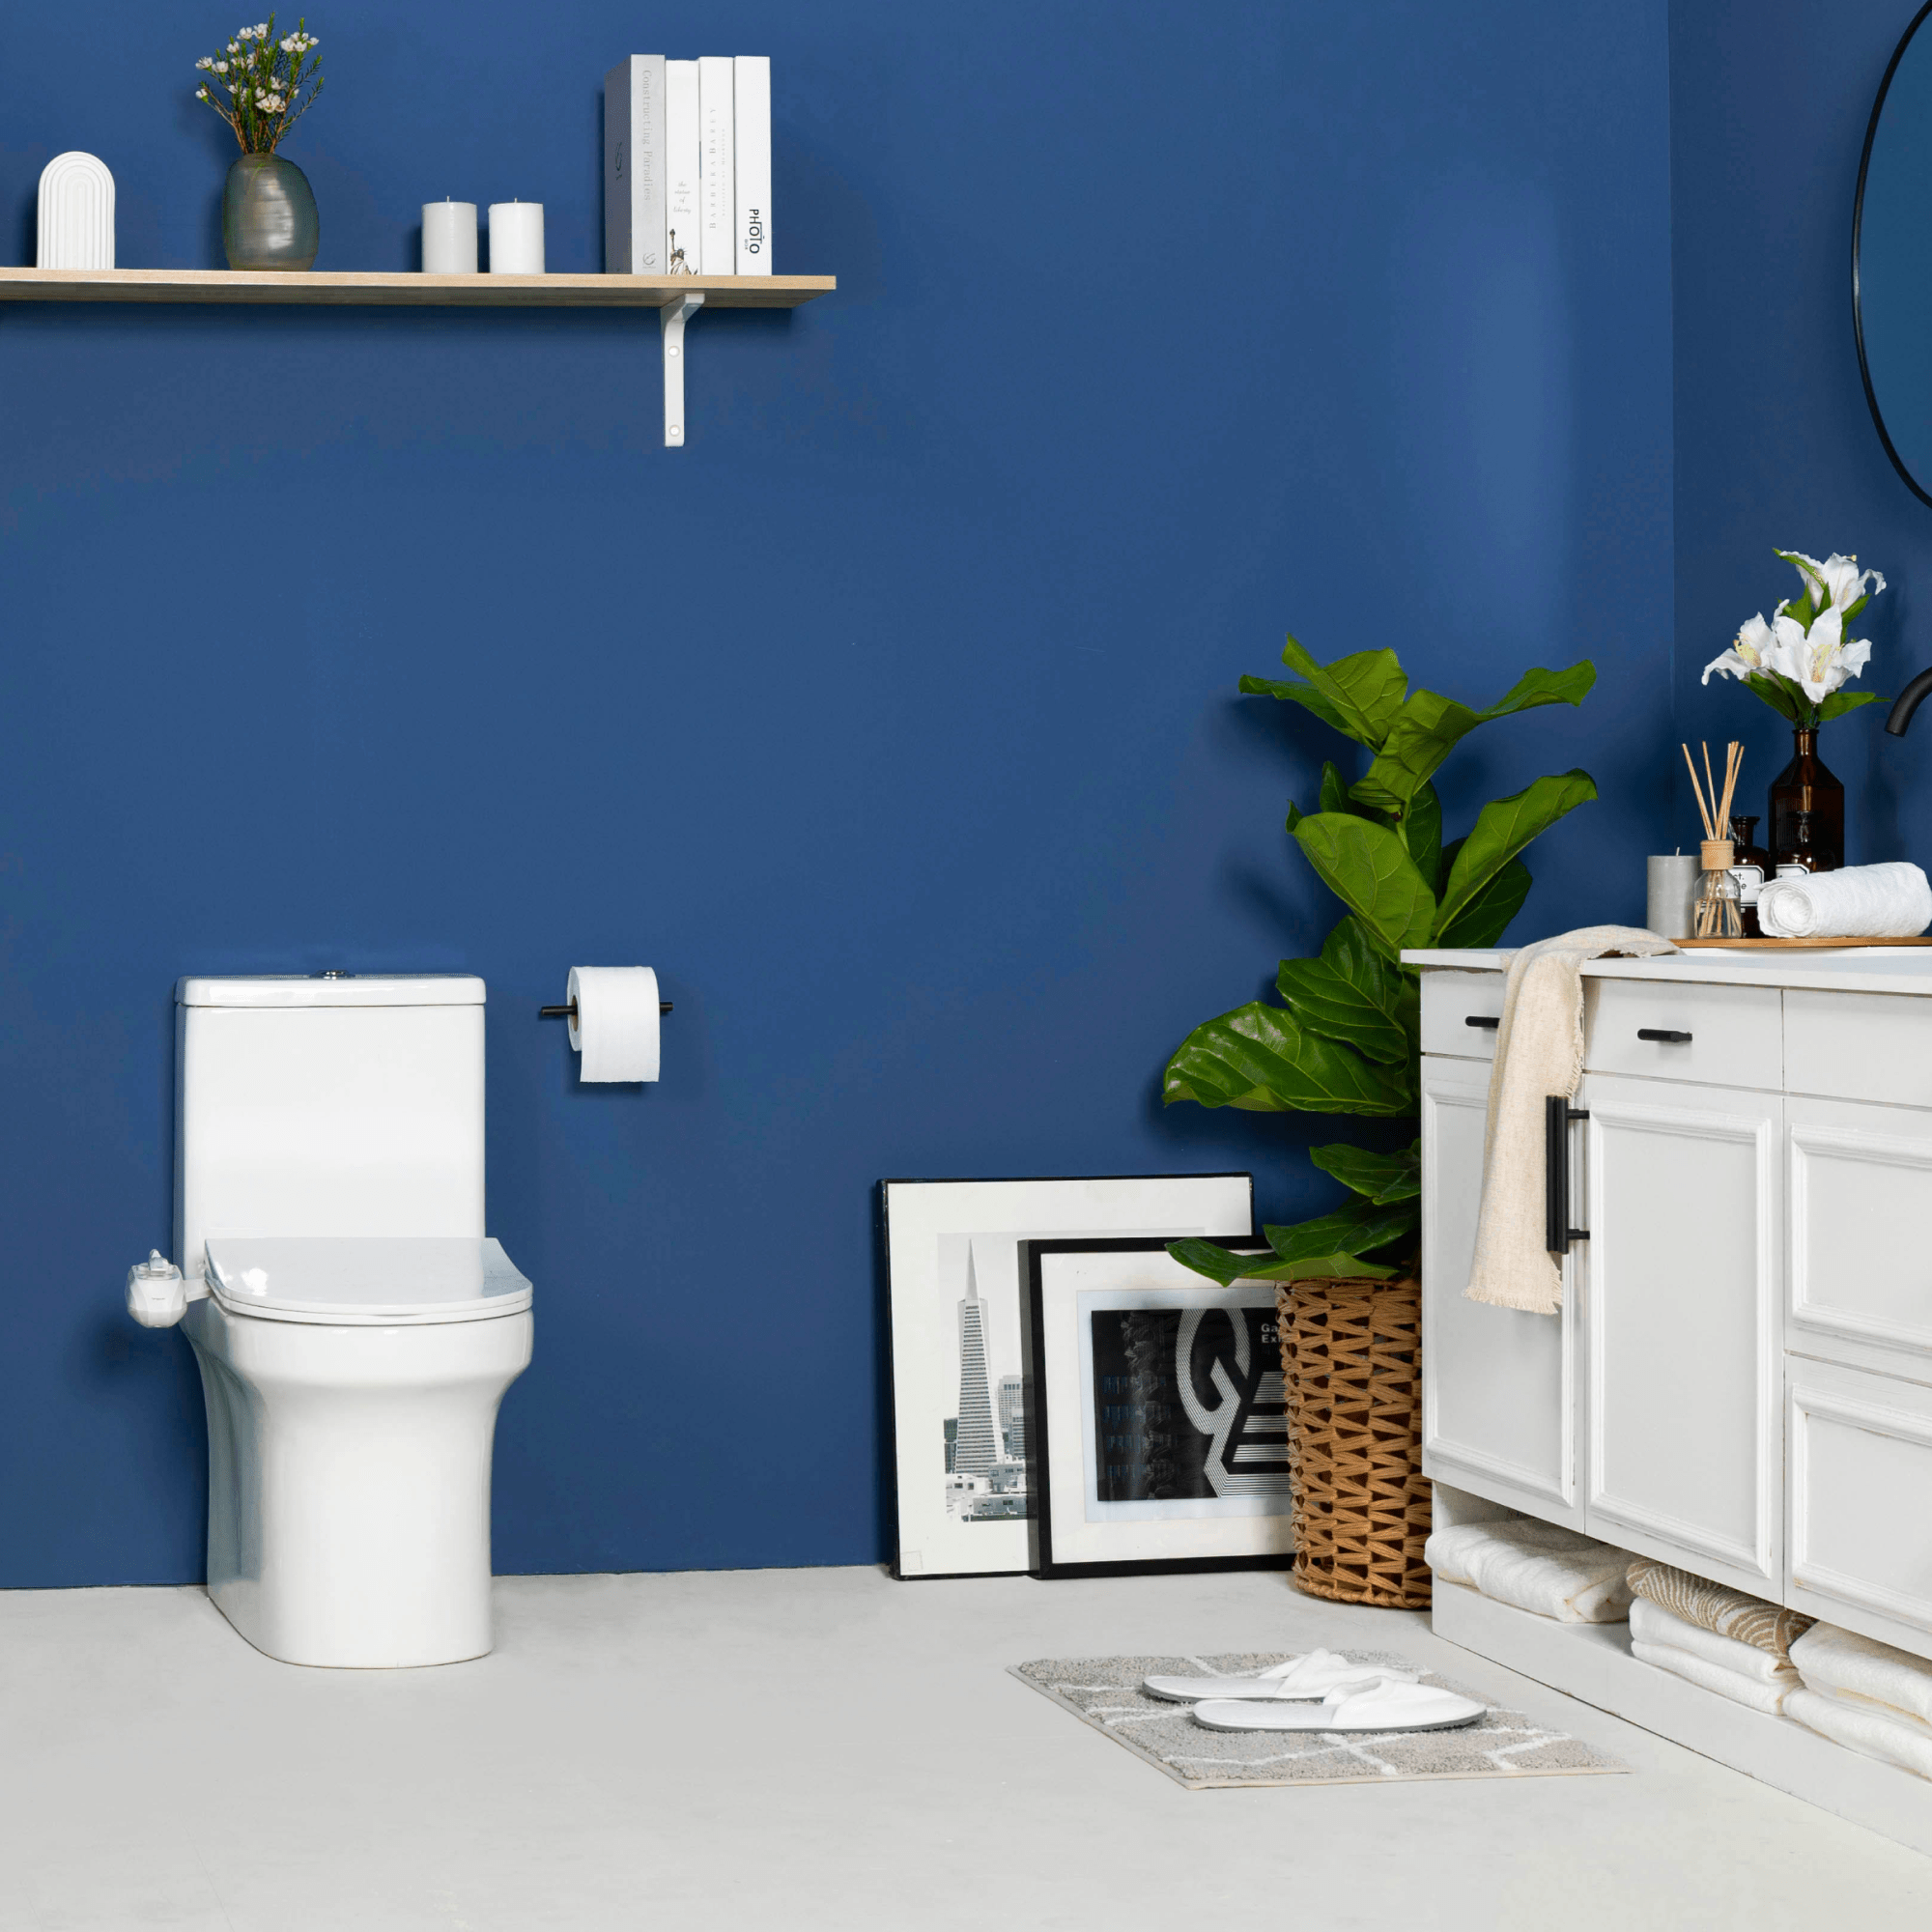 NEO 320 Plus White elevates your bathroom to a modern style